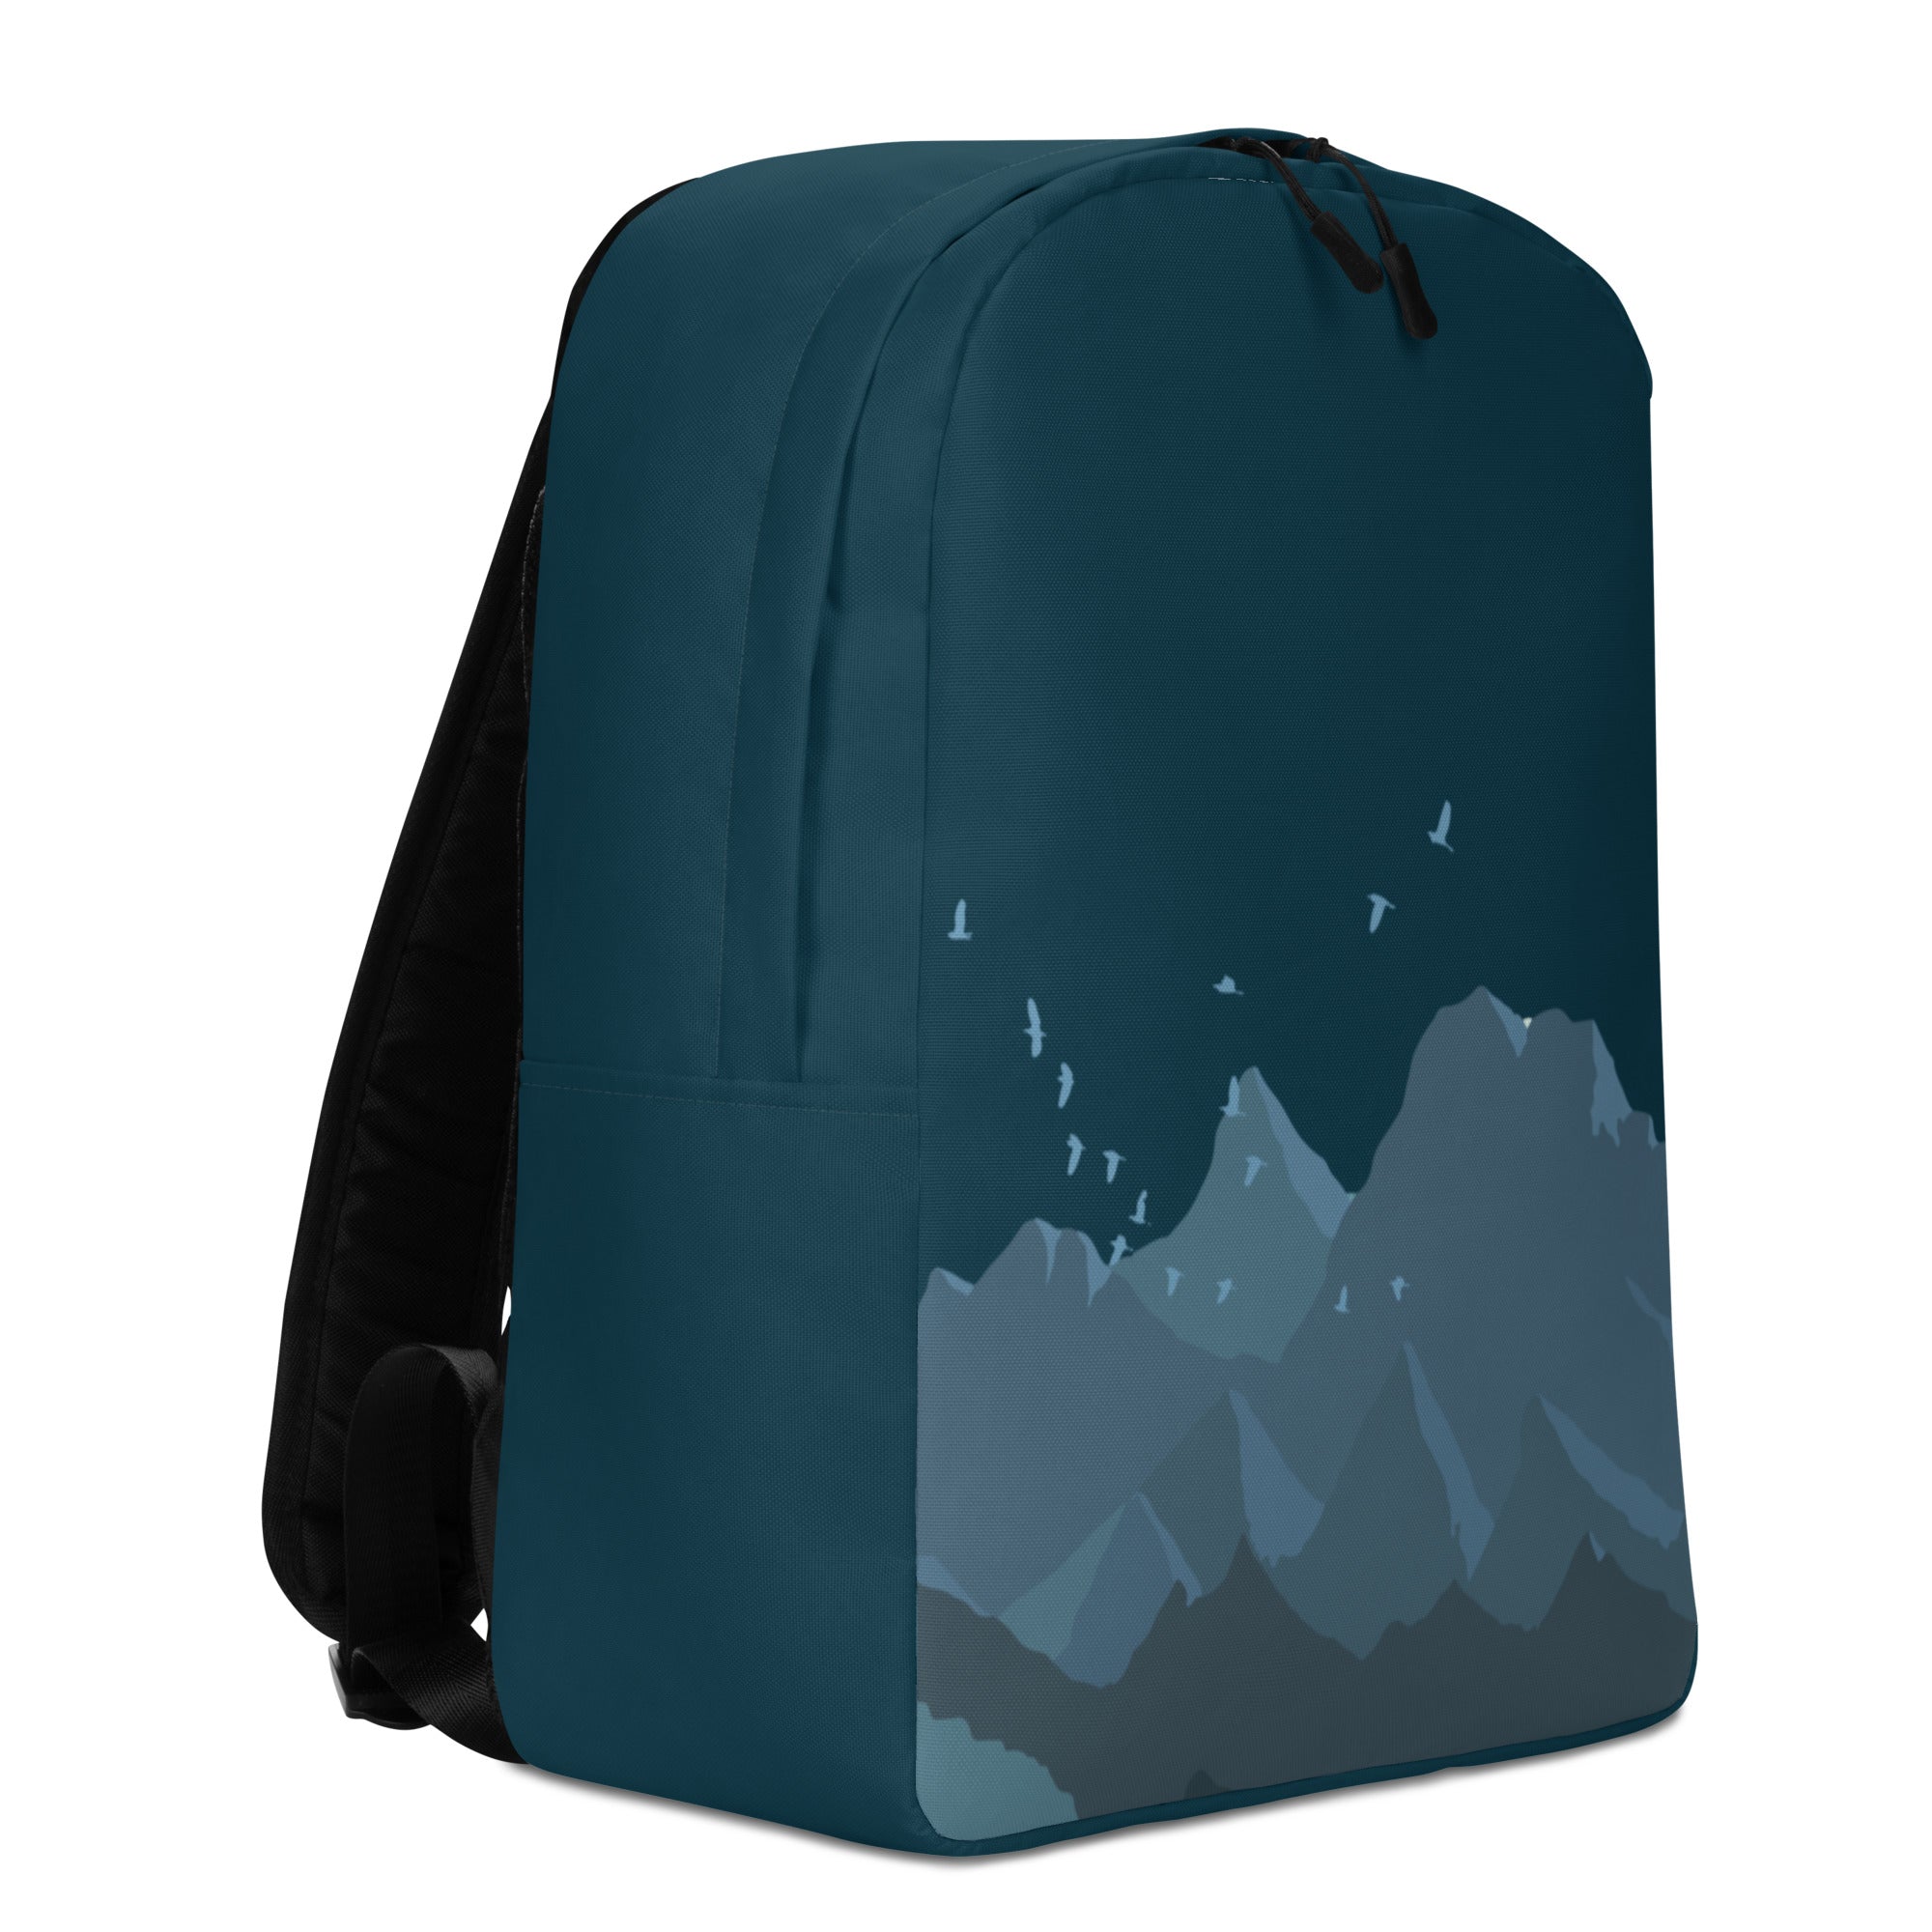 Summit Backpack